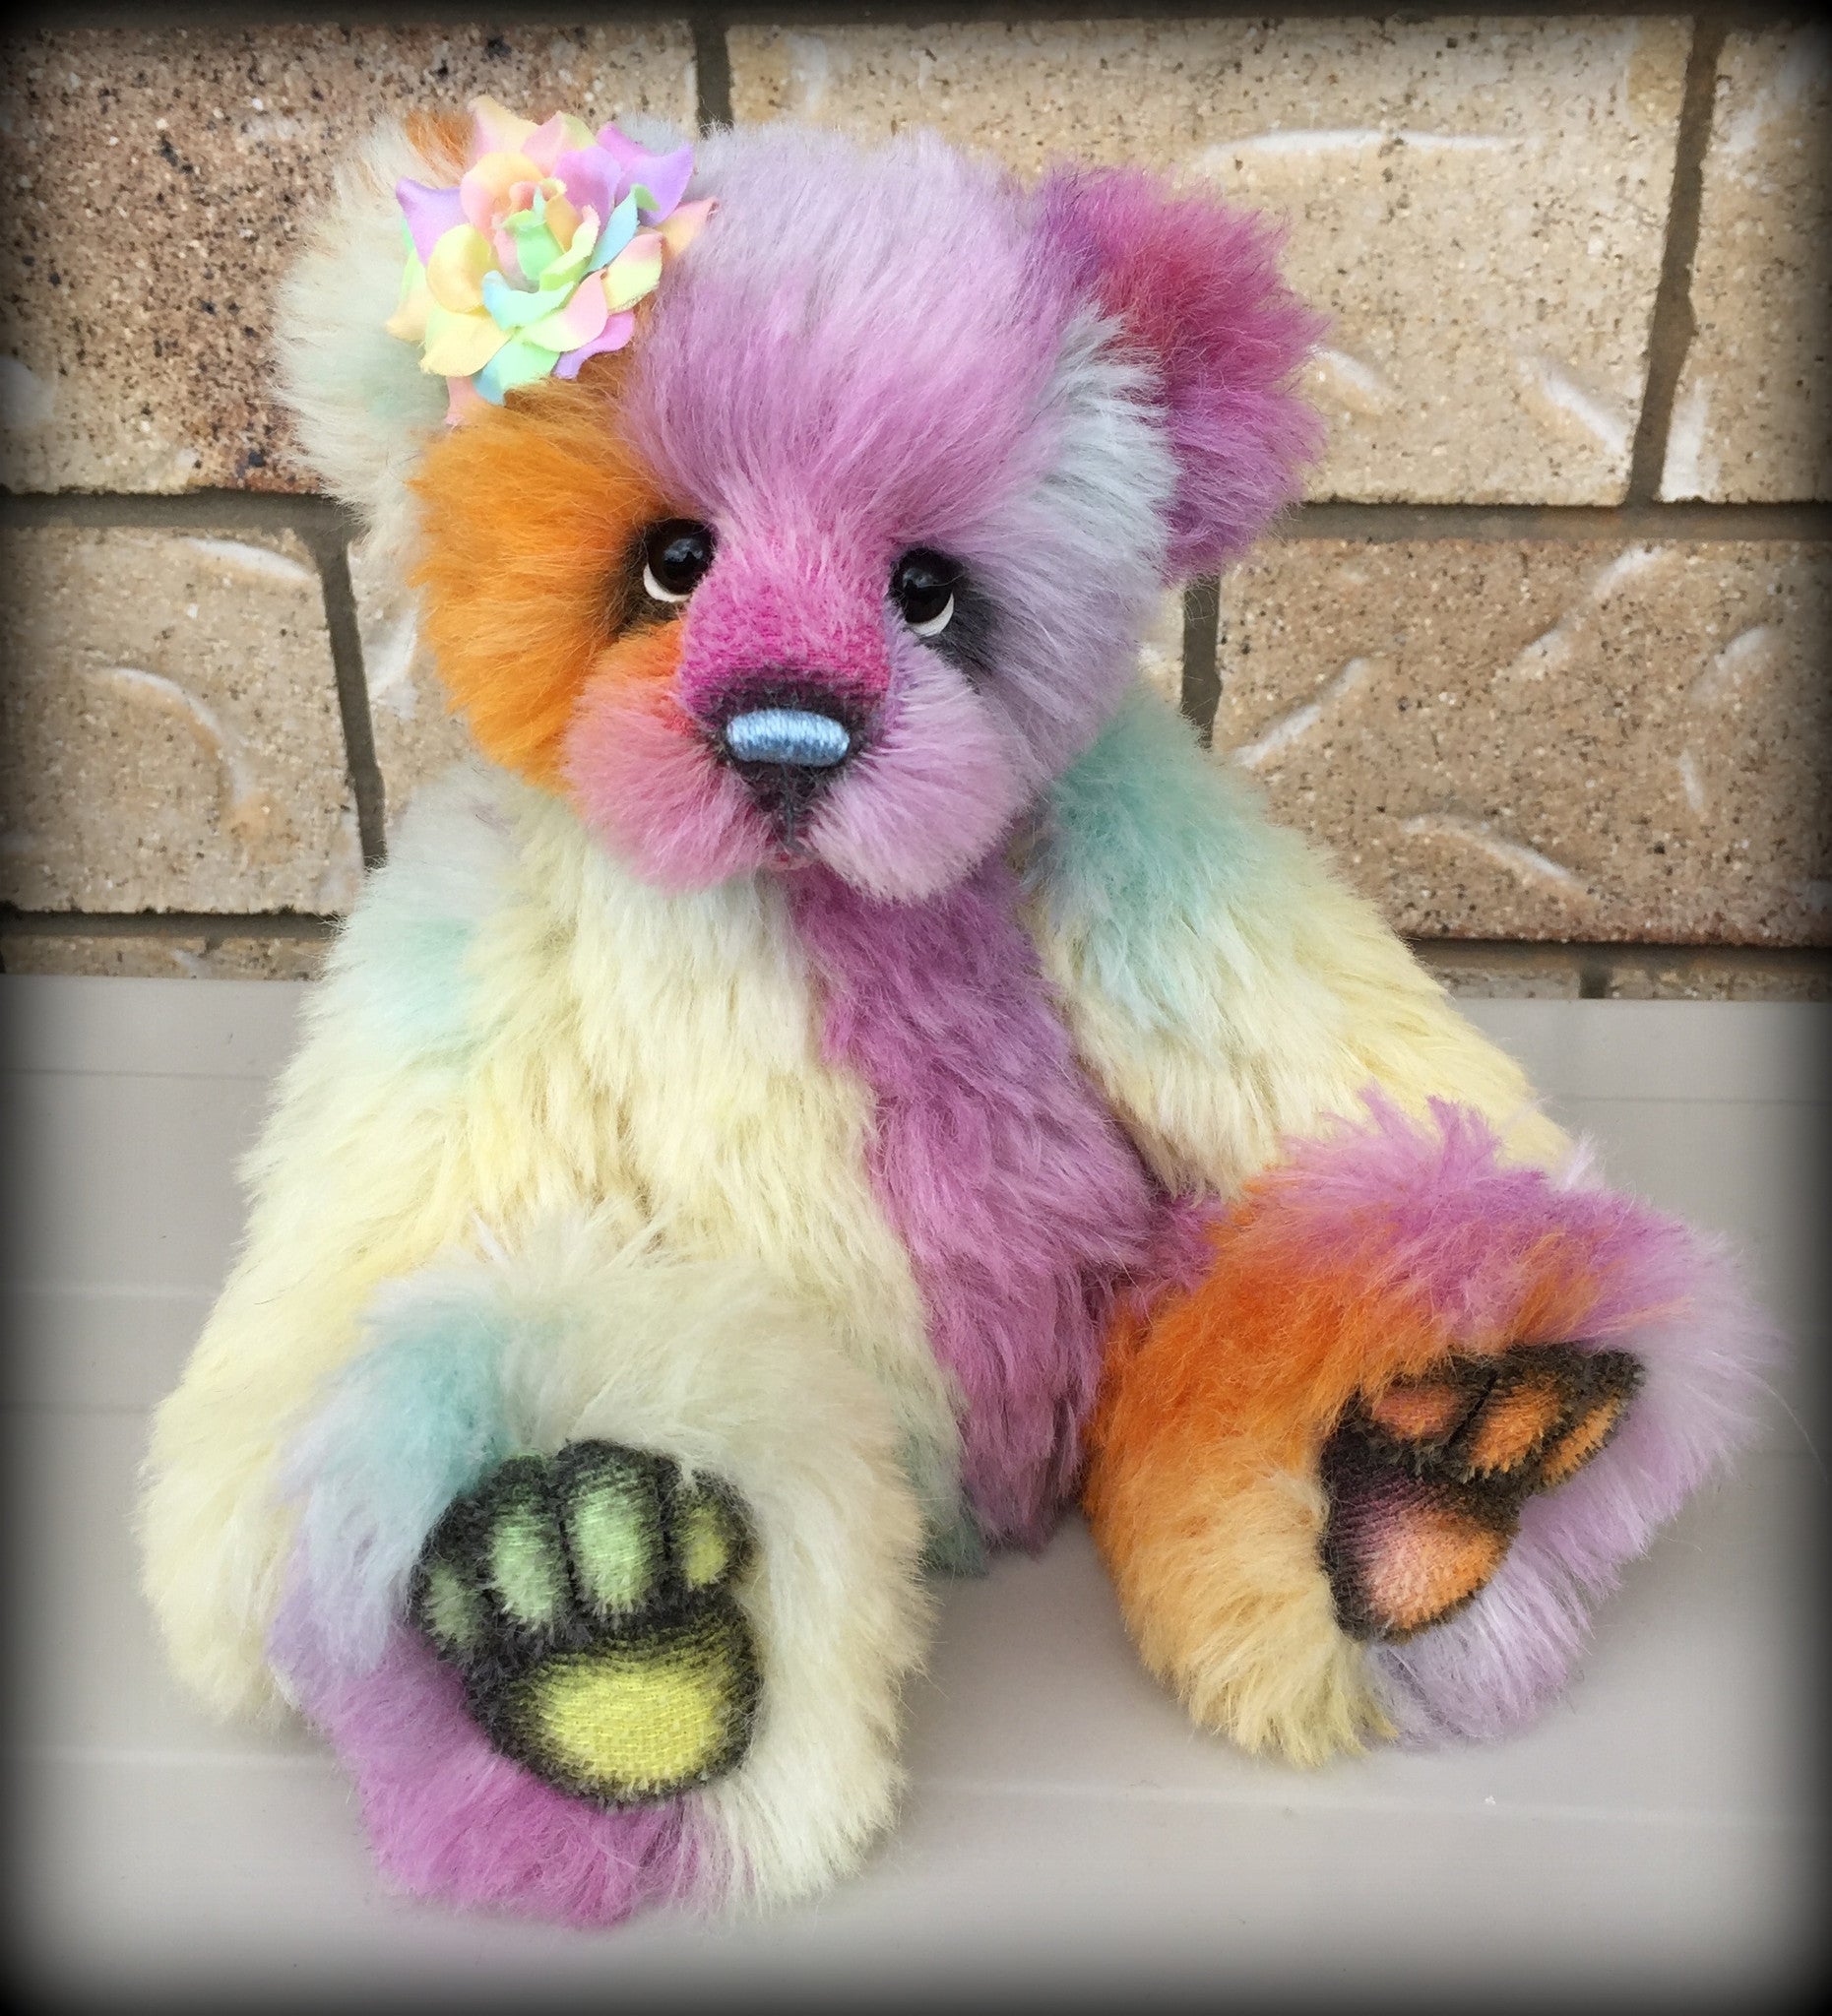 Clara - 12" rainbow alpaca artist bear by Emmas Bears - OOAK